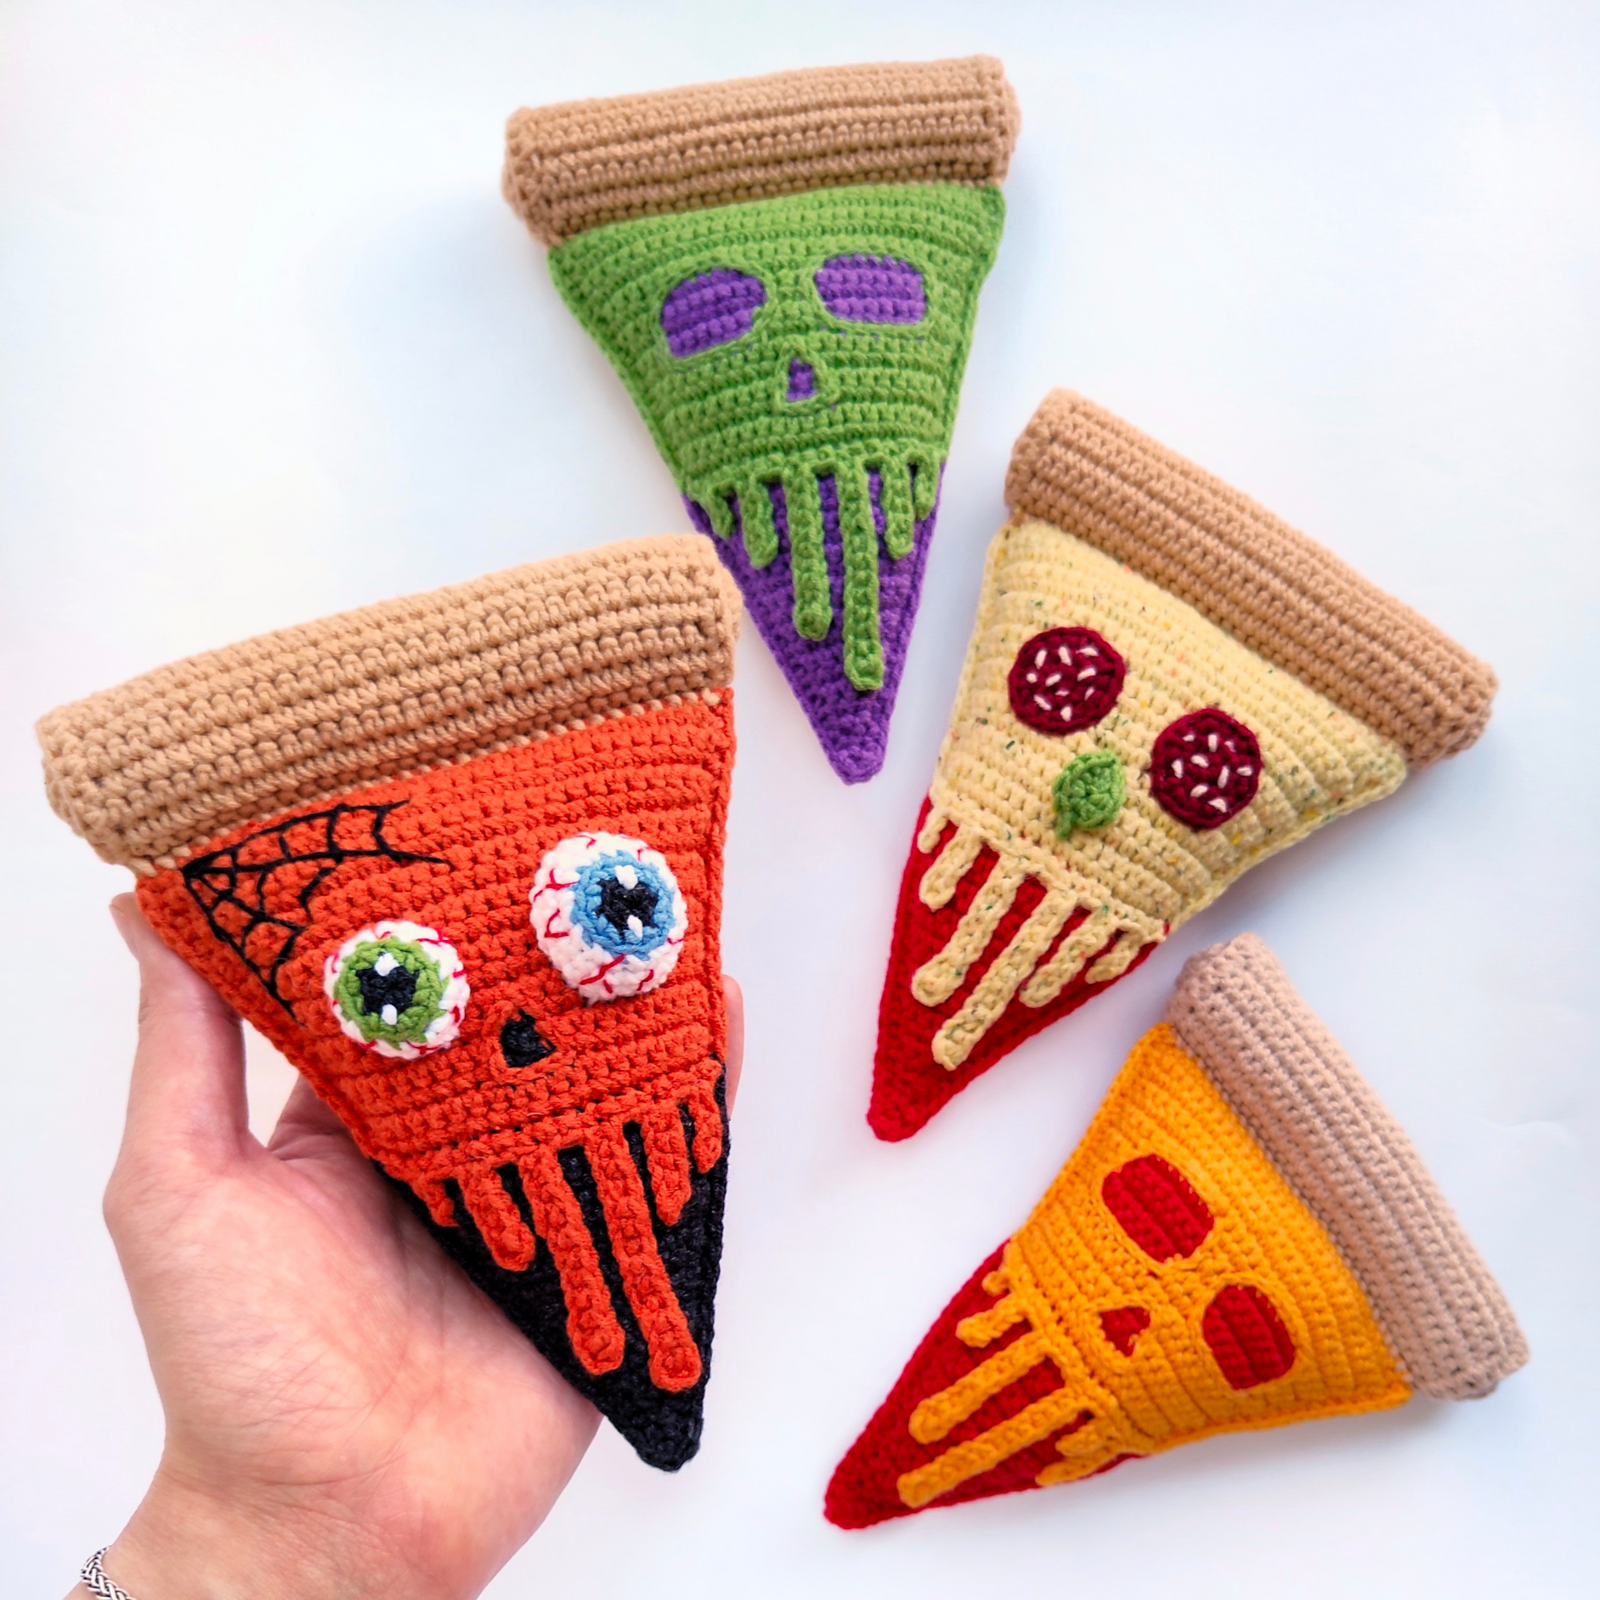 How Many Spooky Skull Pizza Amigurumi Can You Crochet By Halloween?